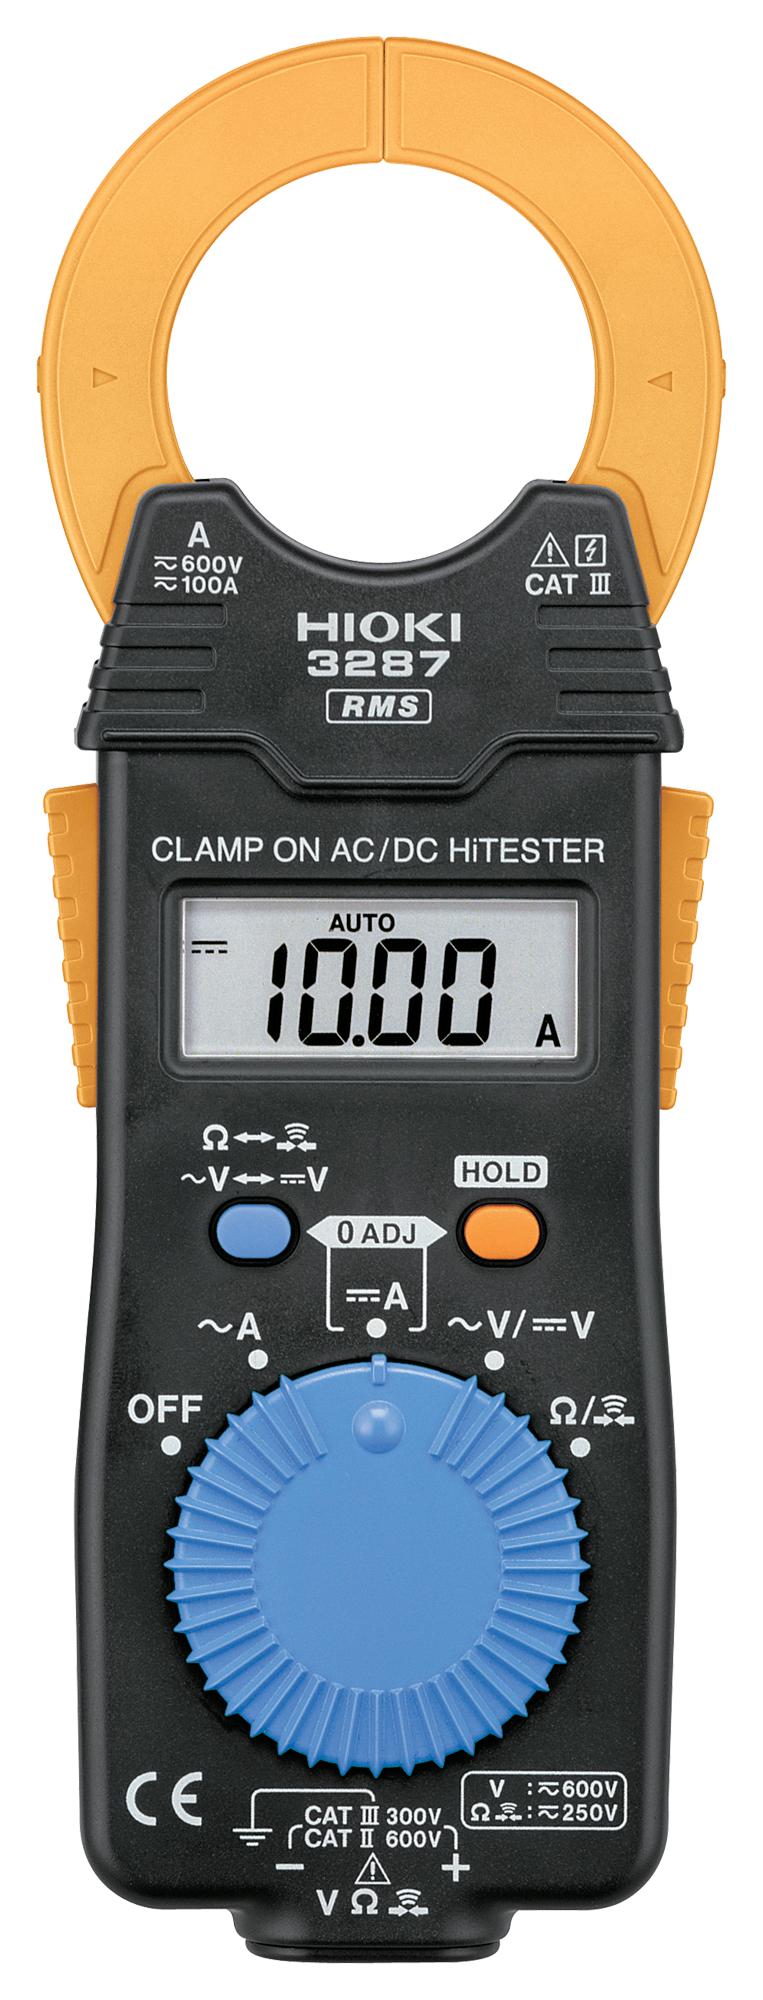 Hioki 3287 Clamp On Ac/dc Hitester, 100A, 600V